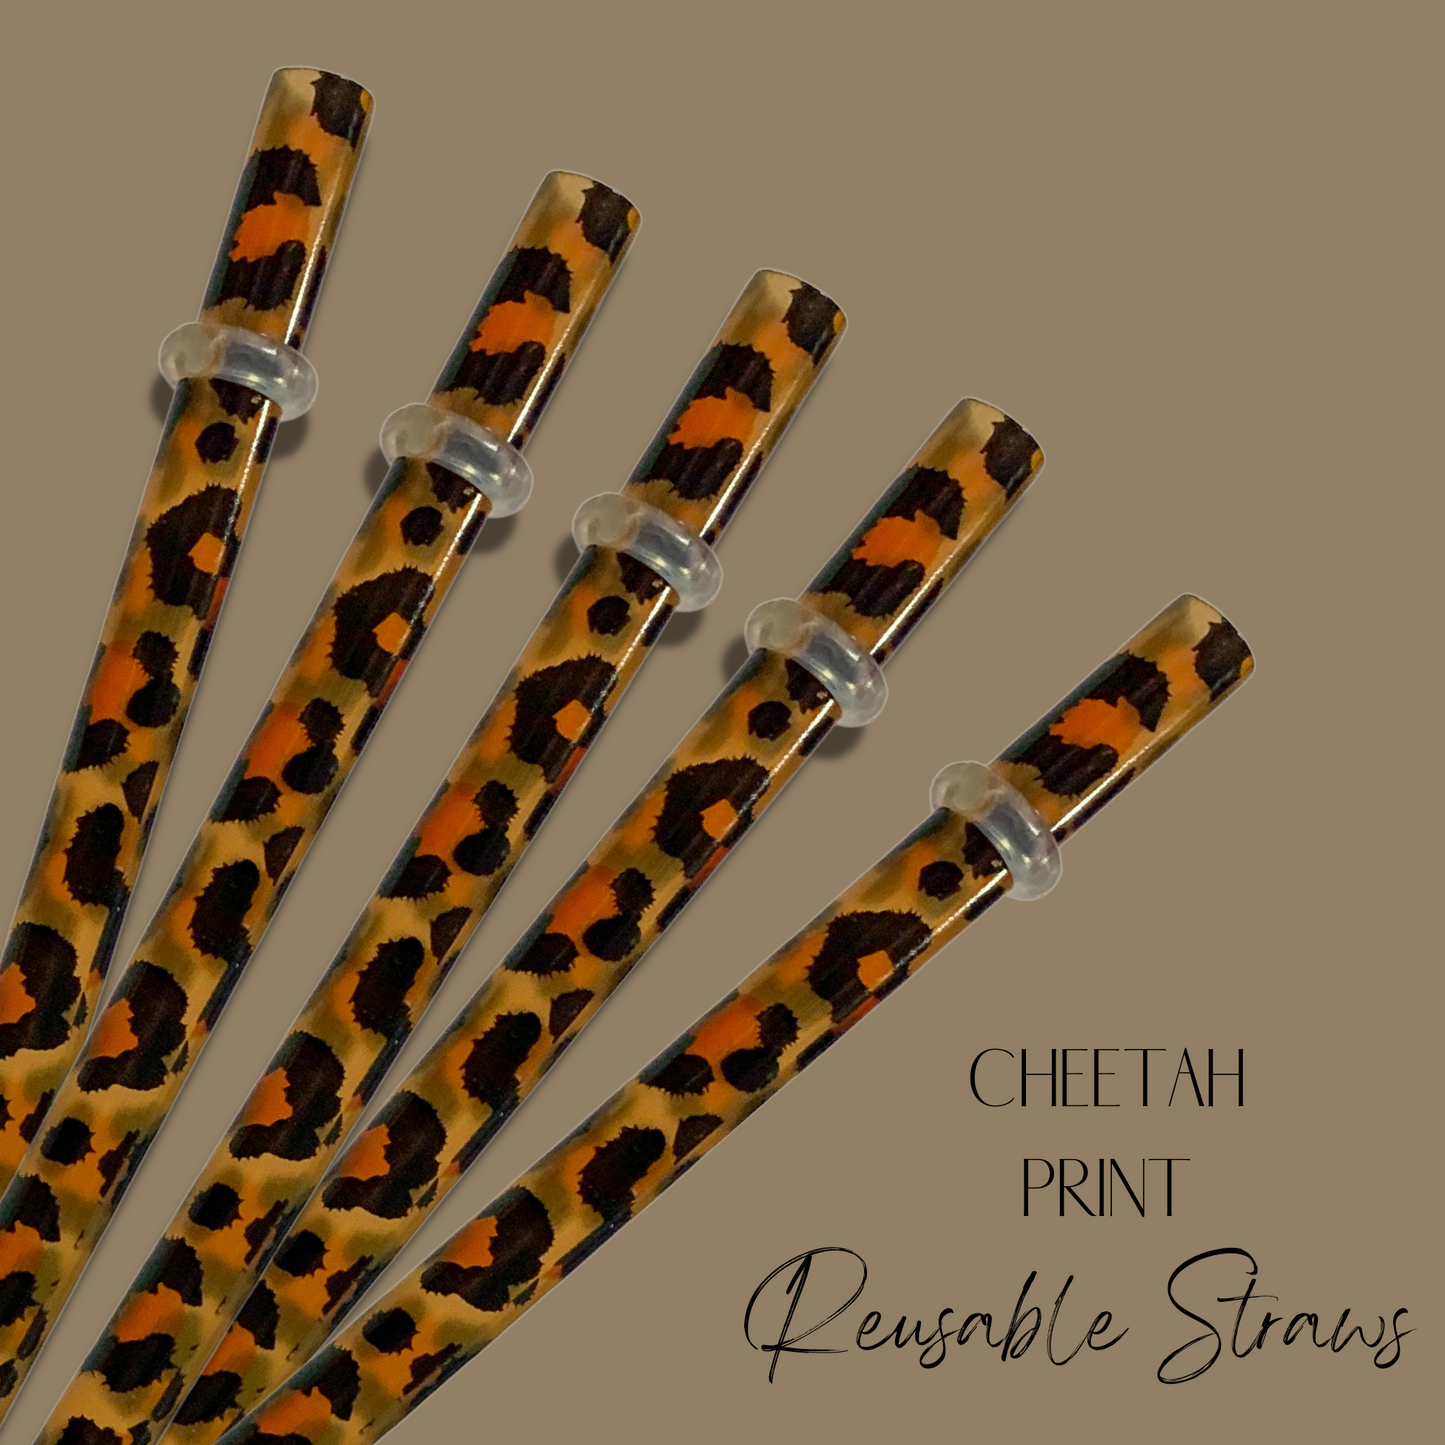 Cheetah Print Straw Cold Cup (24oz)